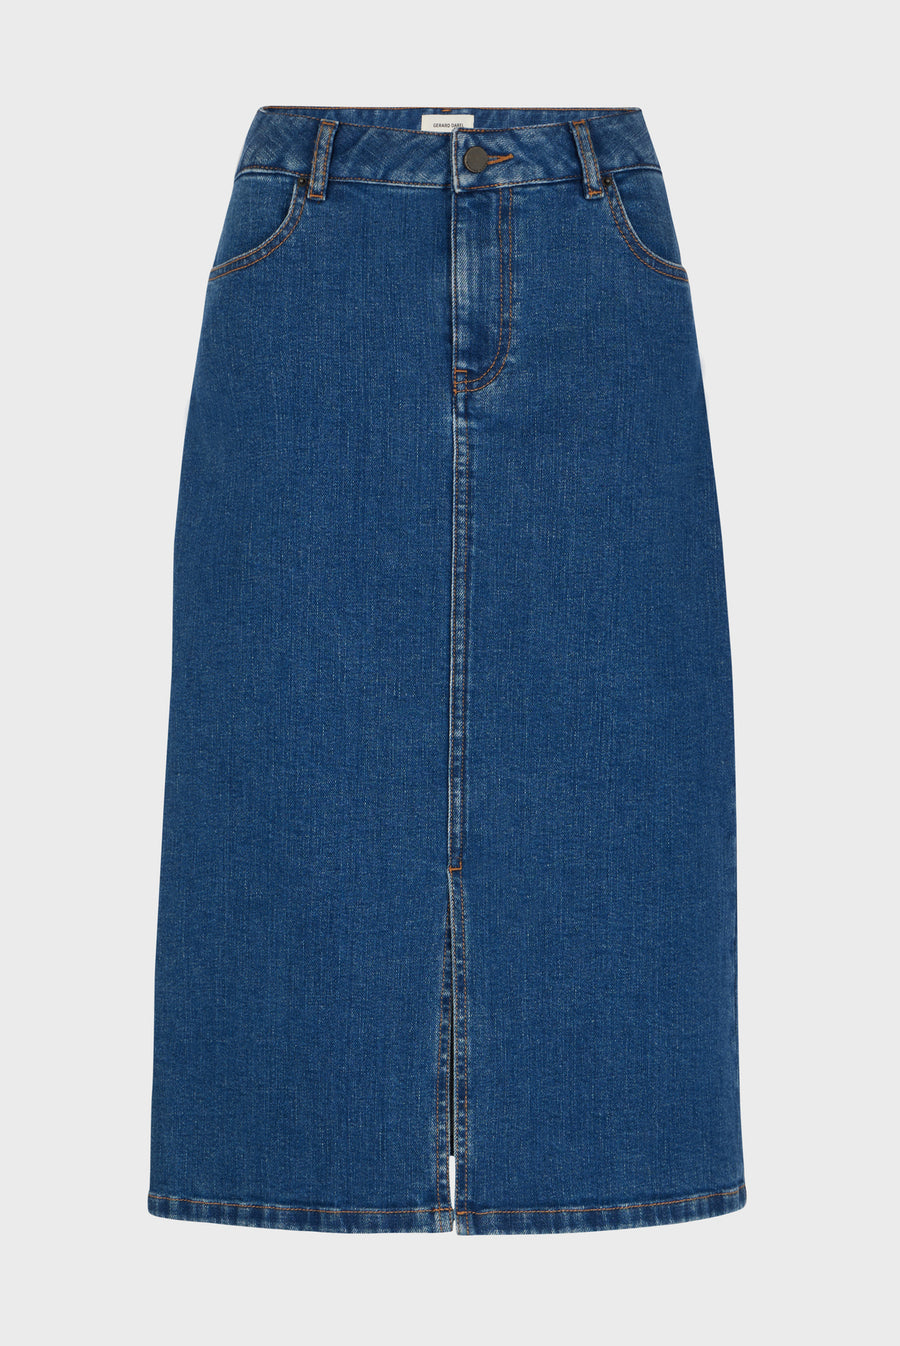 Skirt Benedicte Dyj14y113 Blue